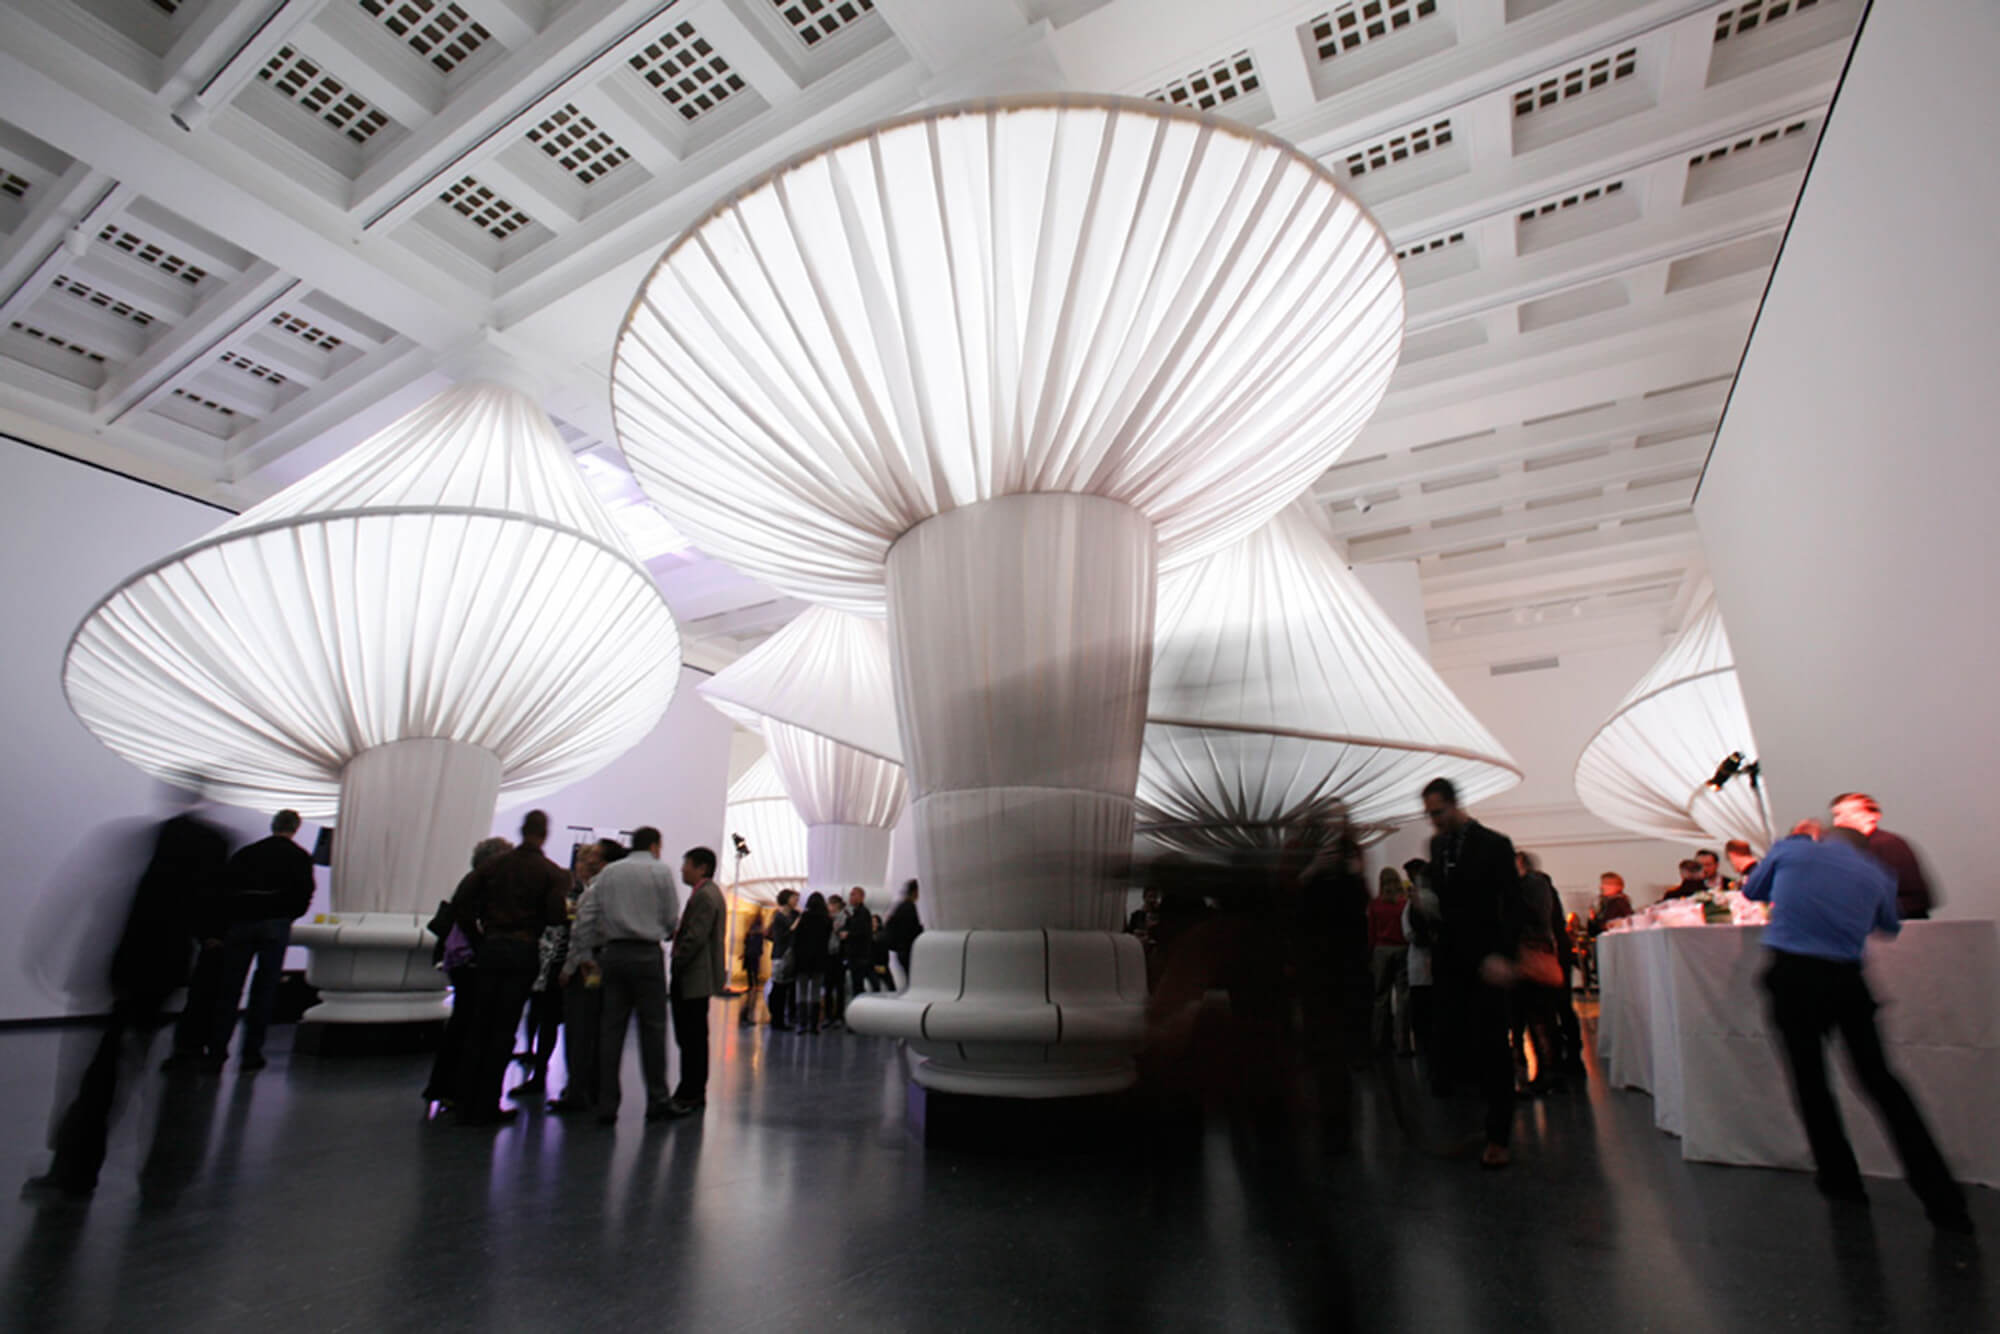 Art exhibit by Situ Studio featuring Sunbrella fabrics on display at the Brooklyn Museum